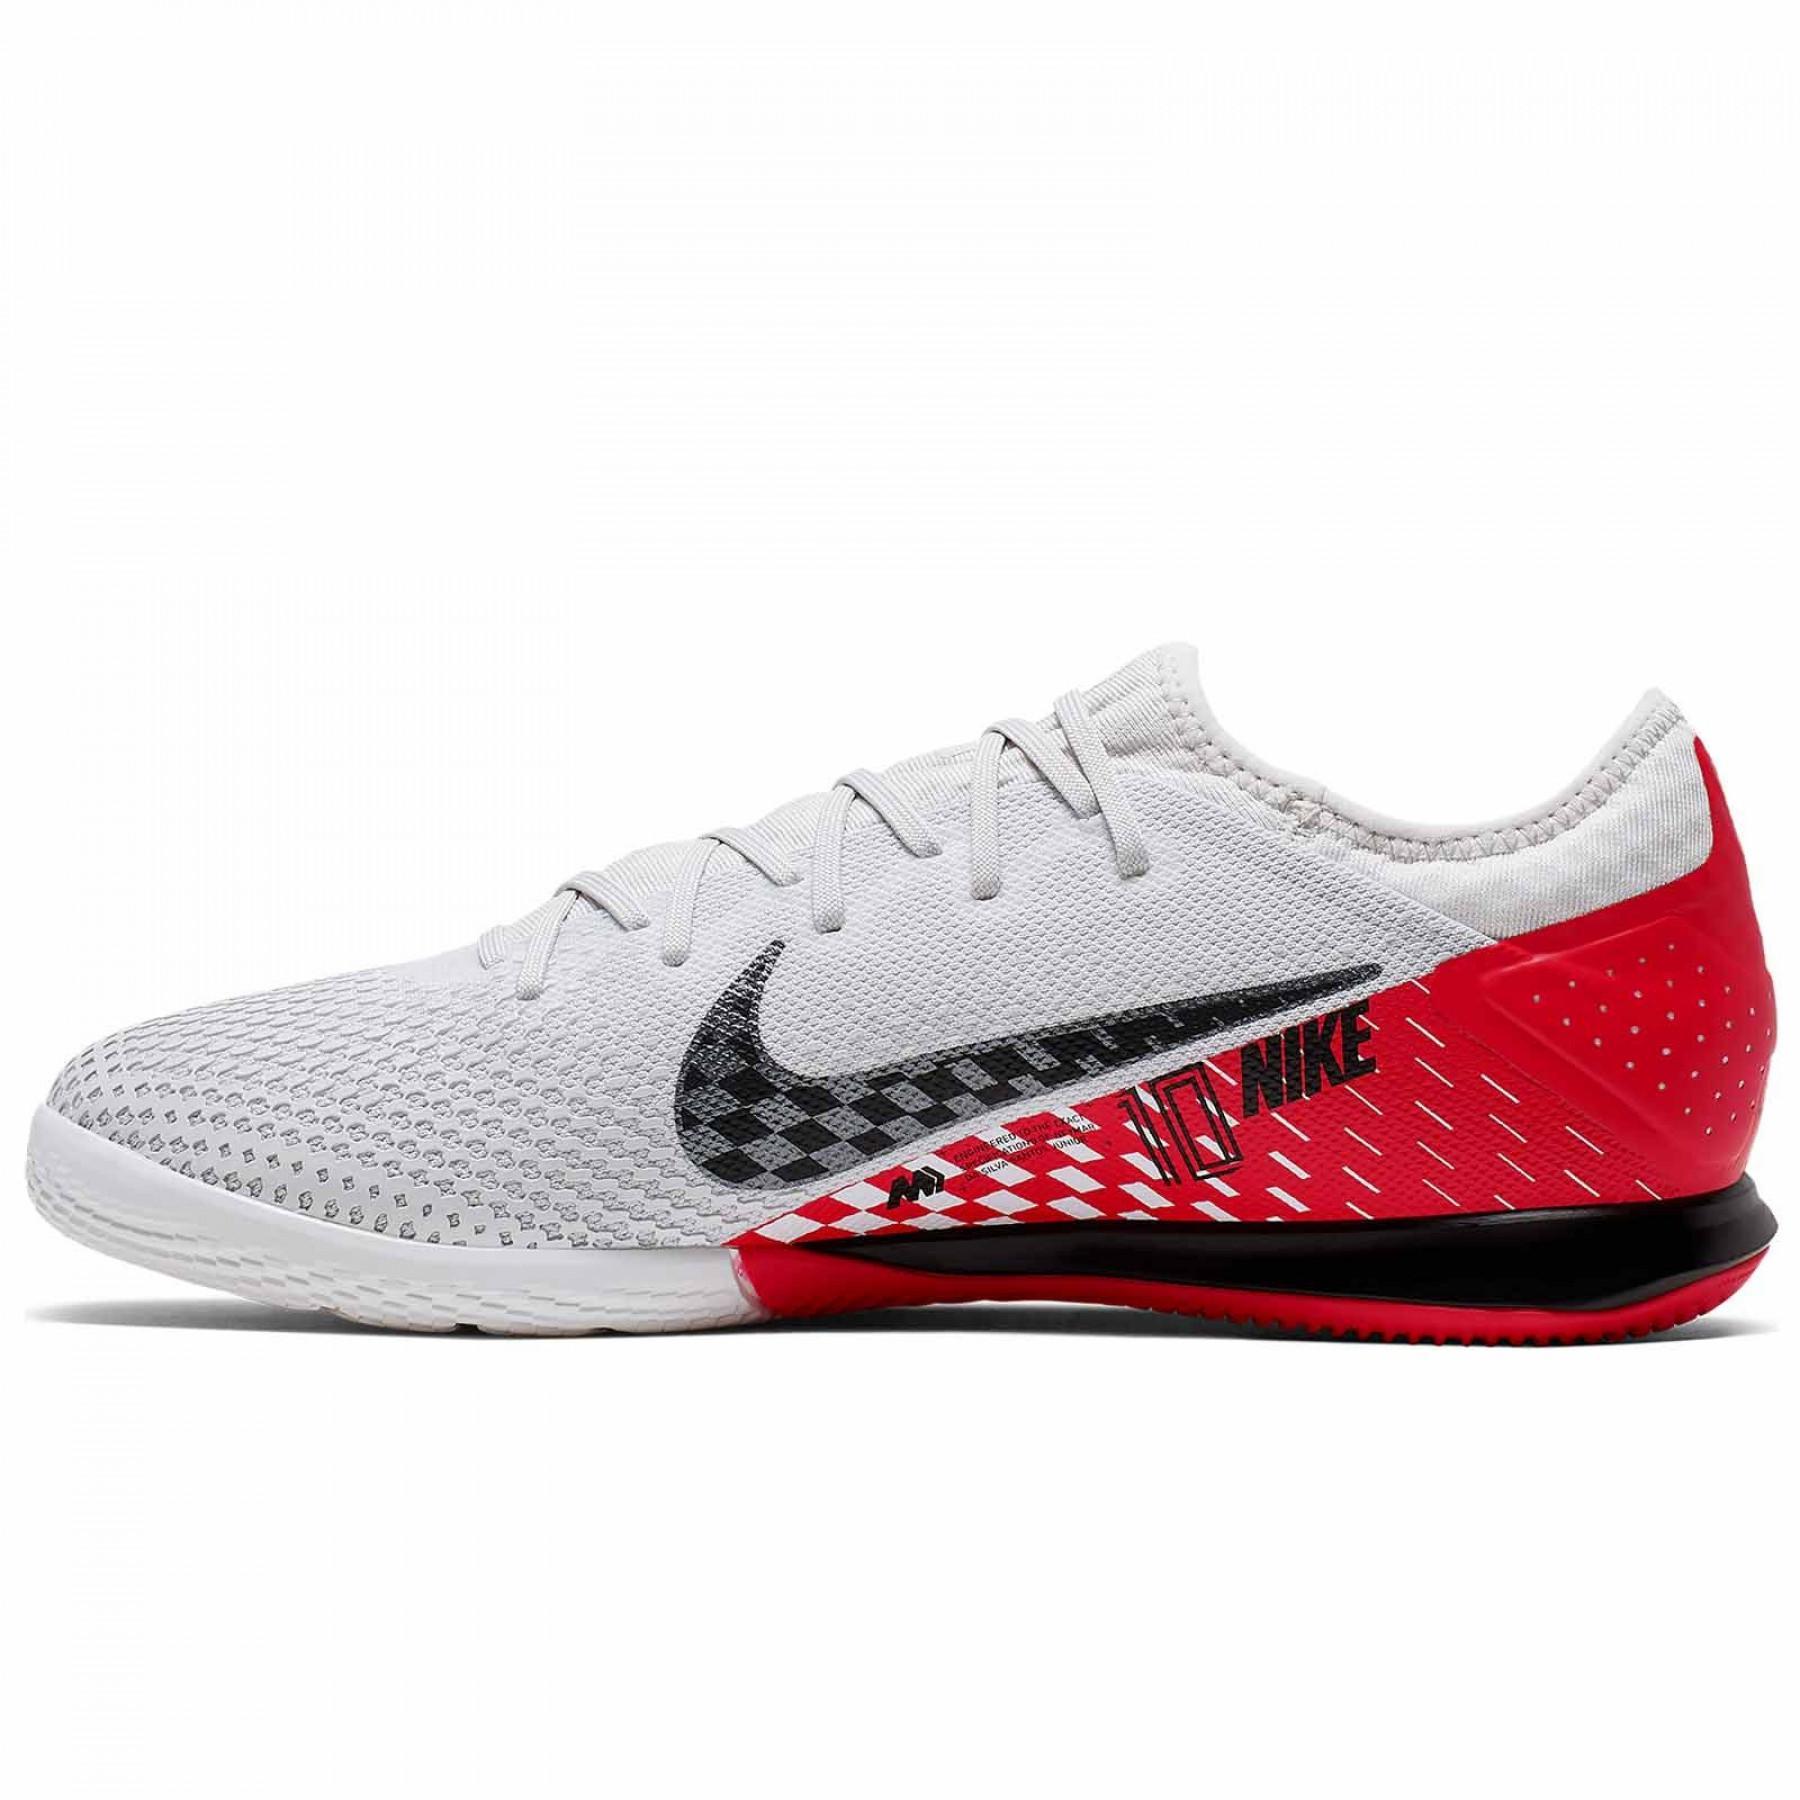 Chaussures de football Nike Mercurial Vapor 13 Pro N IC